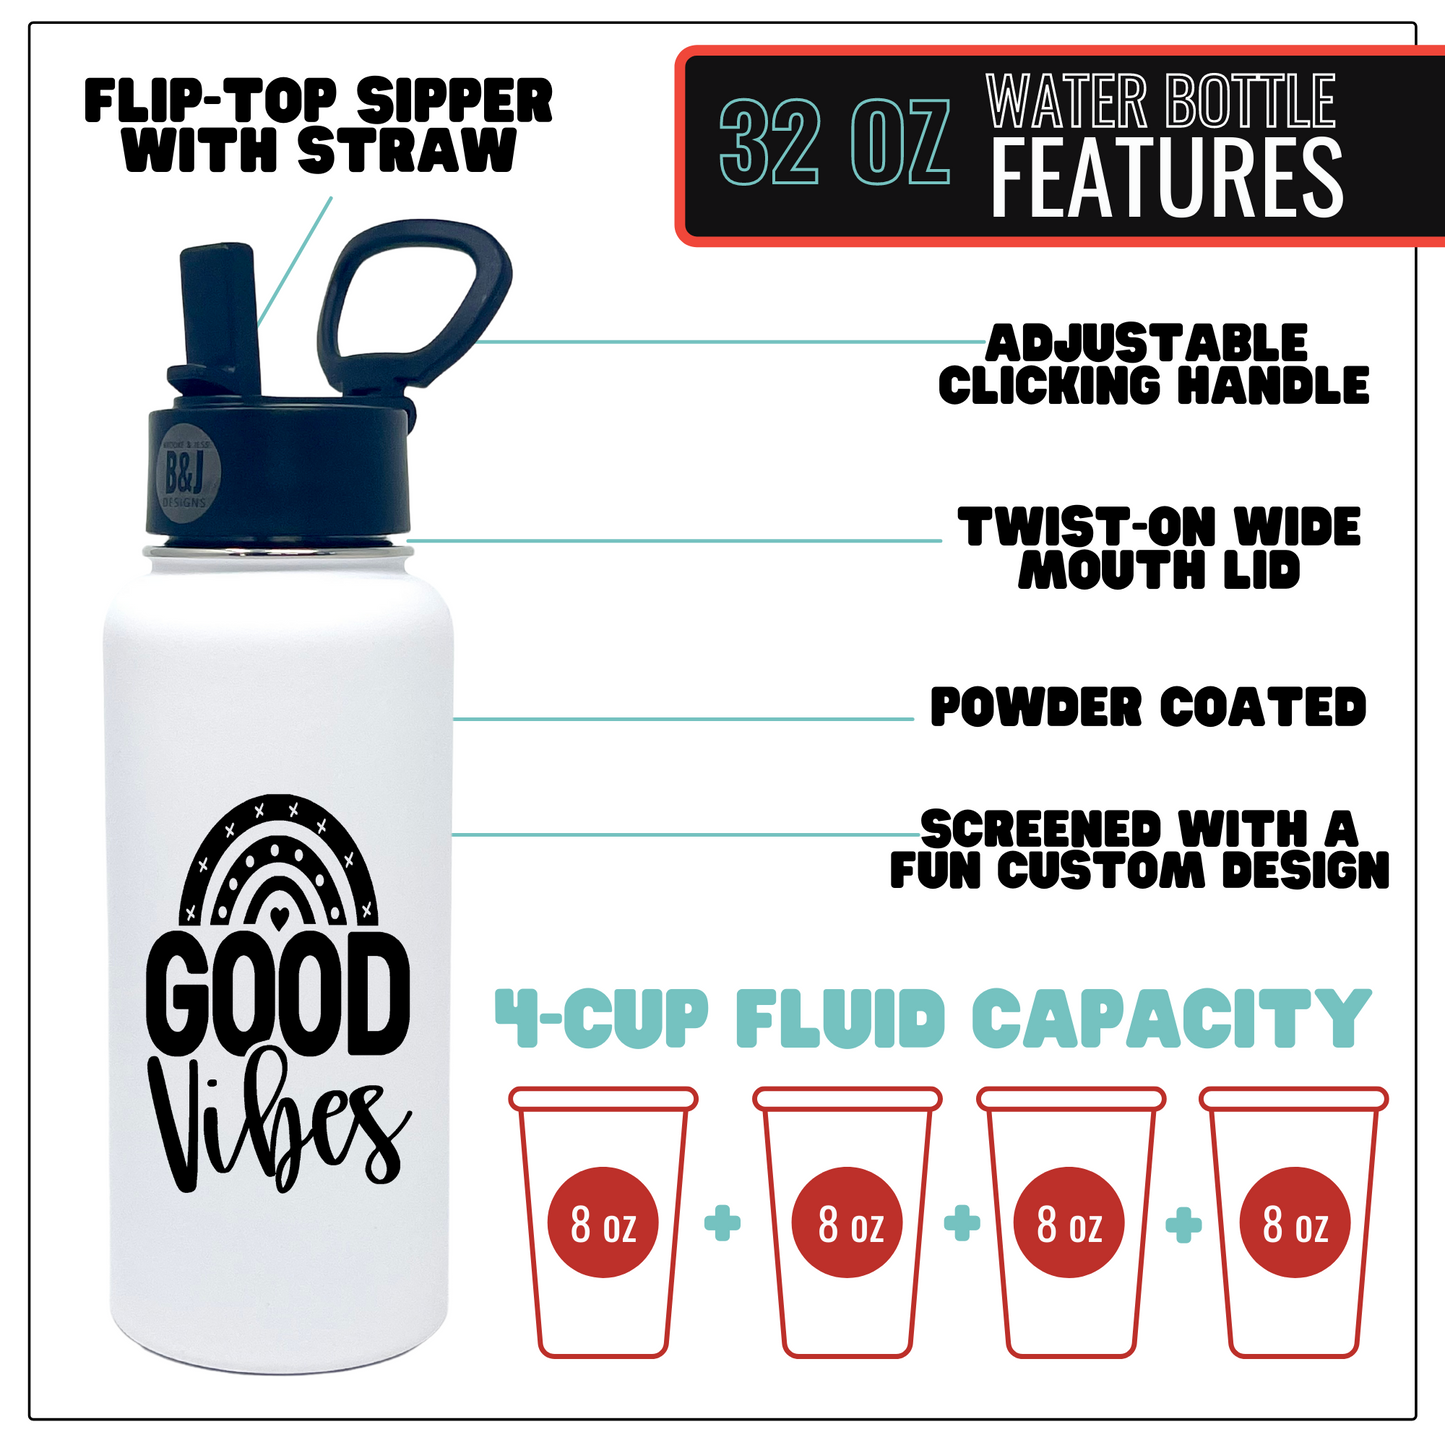 Good Vibes White 32 oz Water Bottle